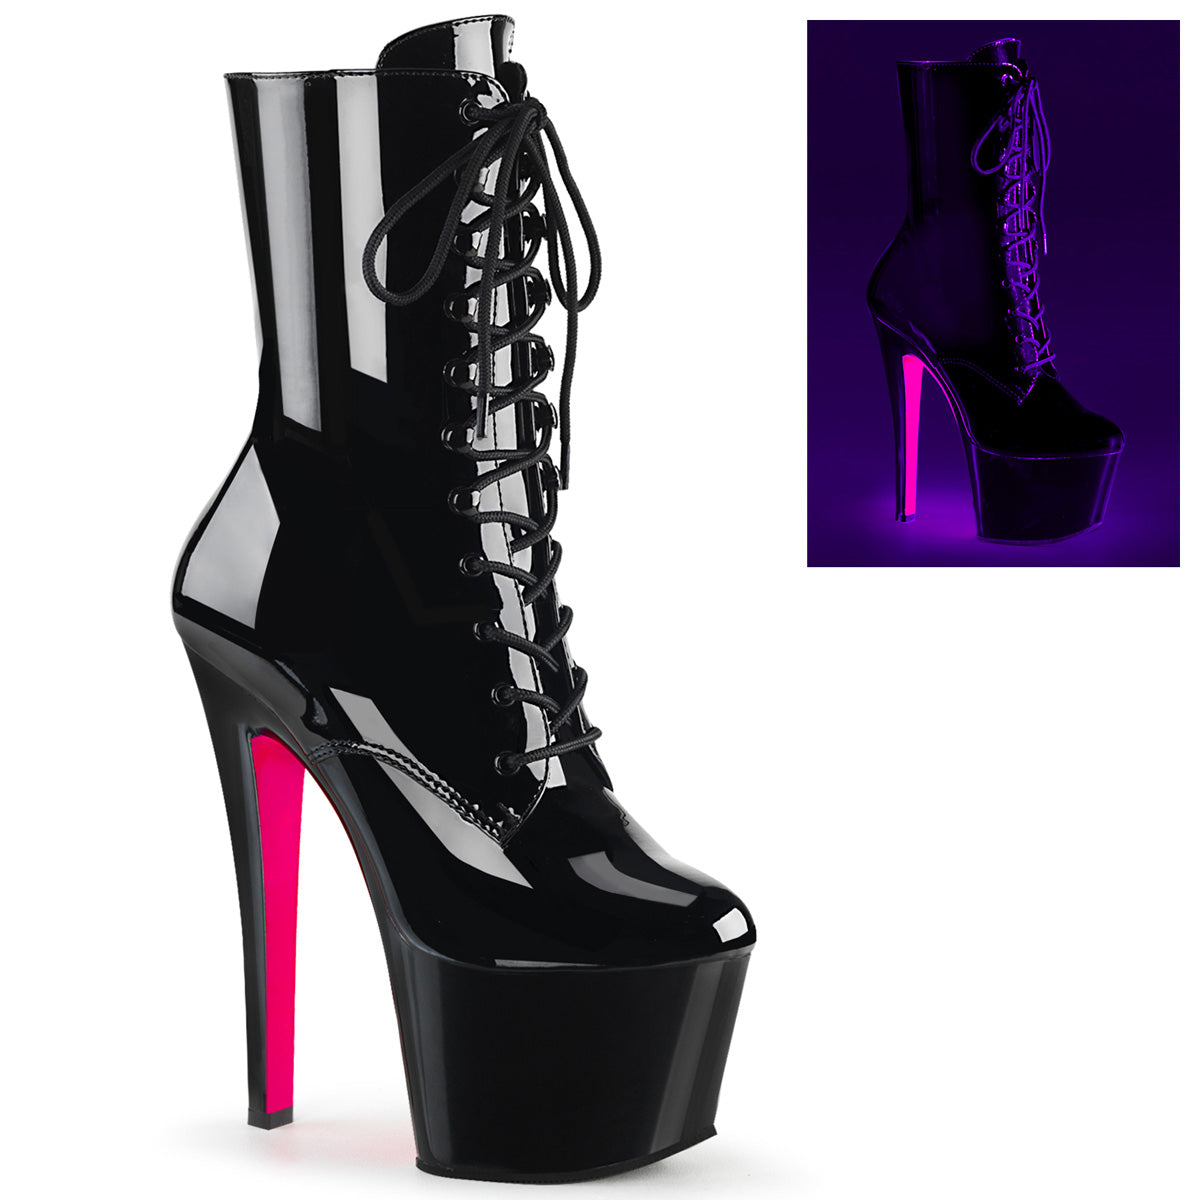 SKY-1020TT 7" Heel Black Patent Hot Pink Pole Dance Ankle Boots